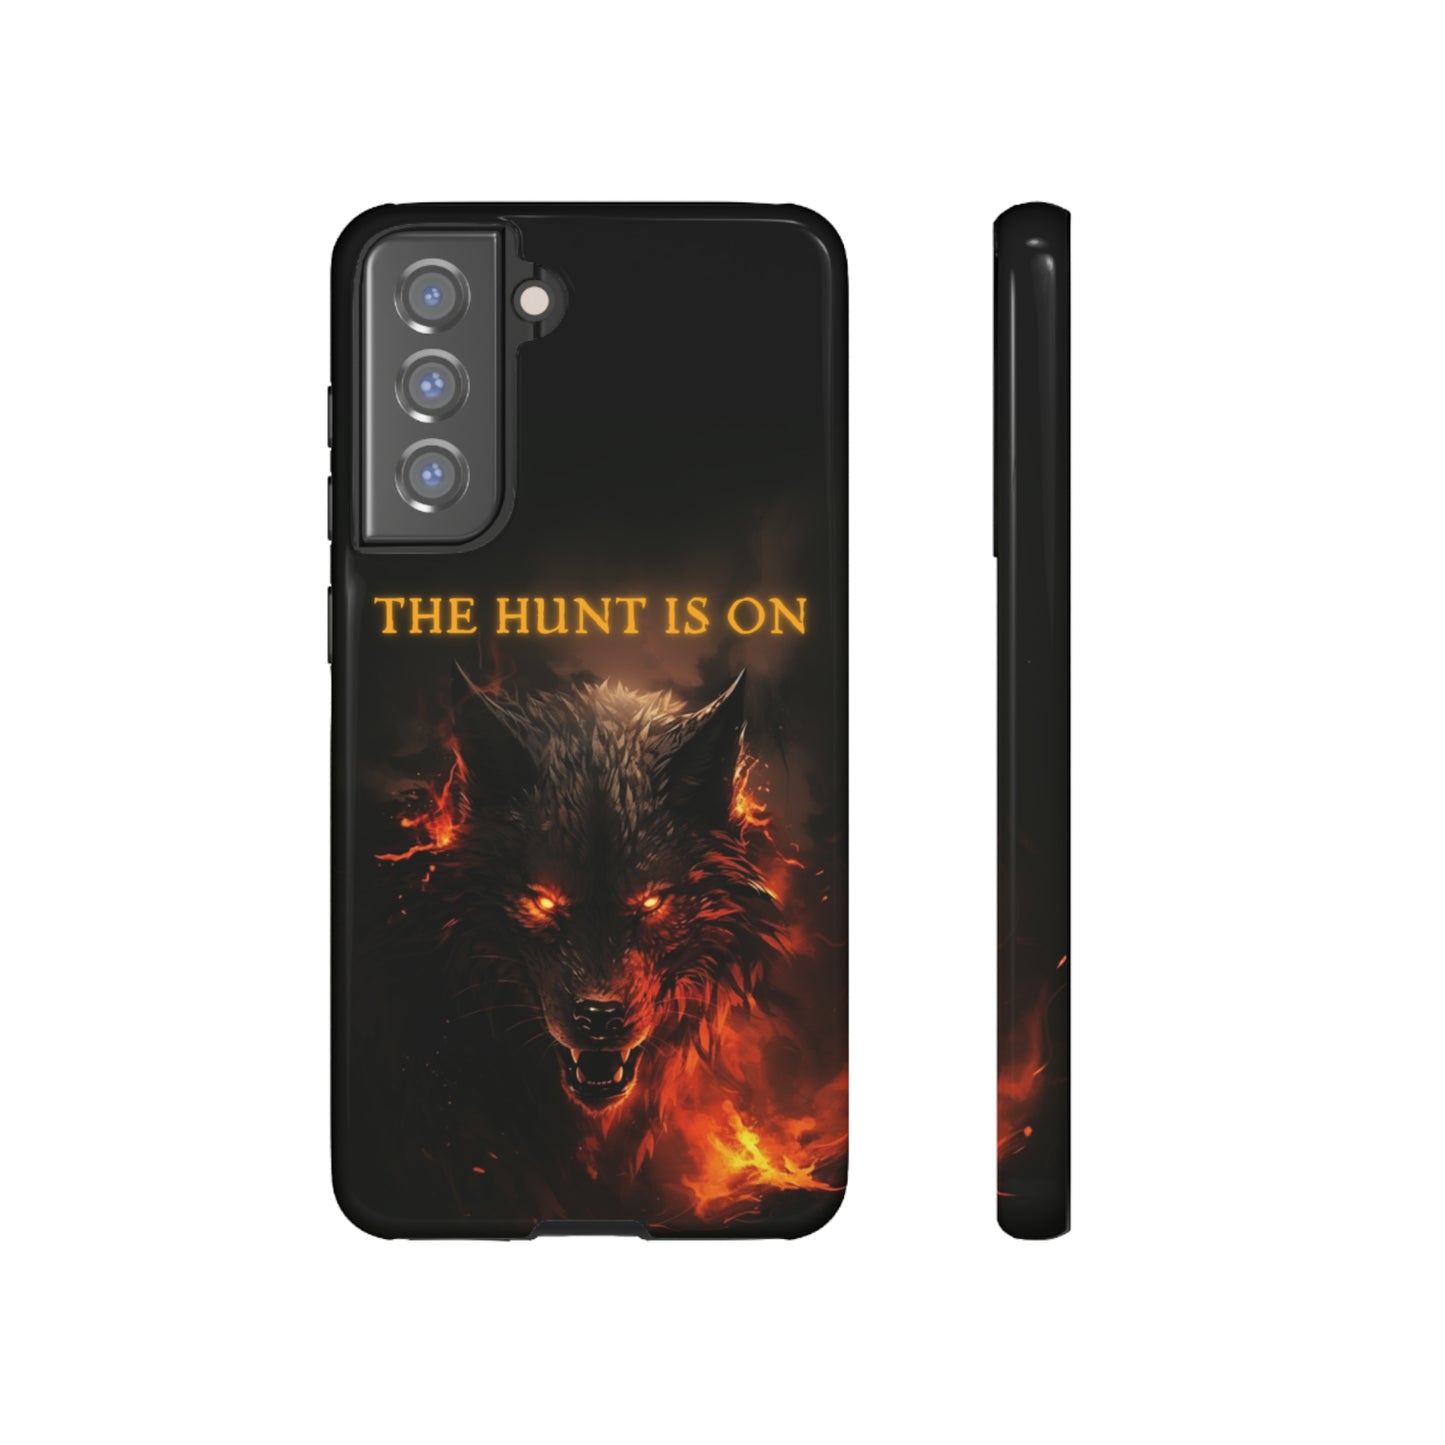 Destiny 2 Iron Banner Inspired Phone Case